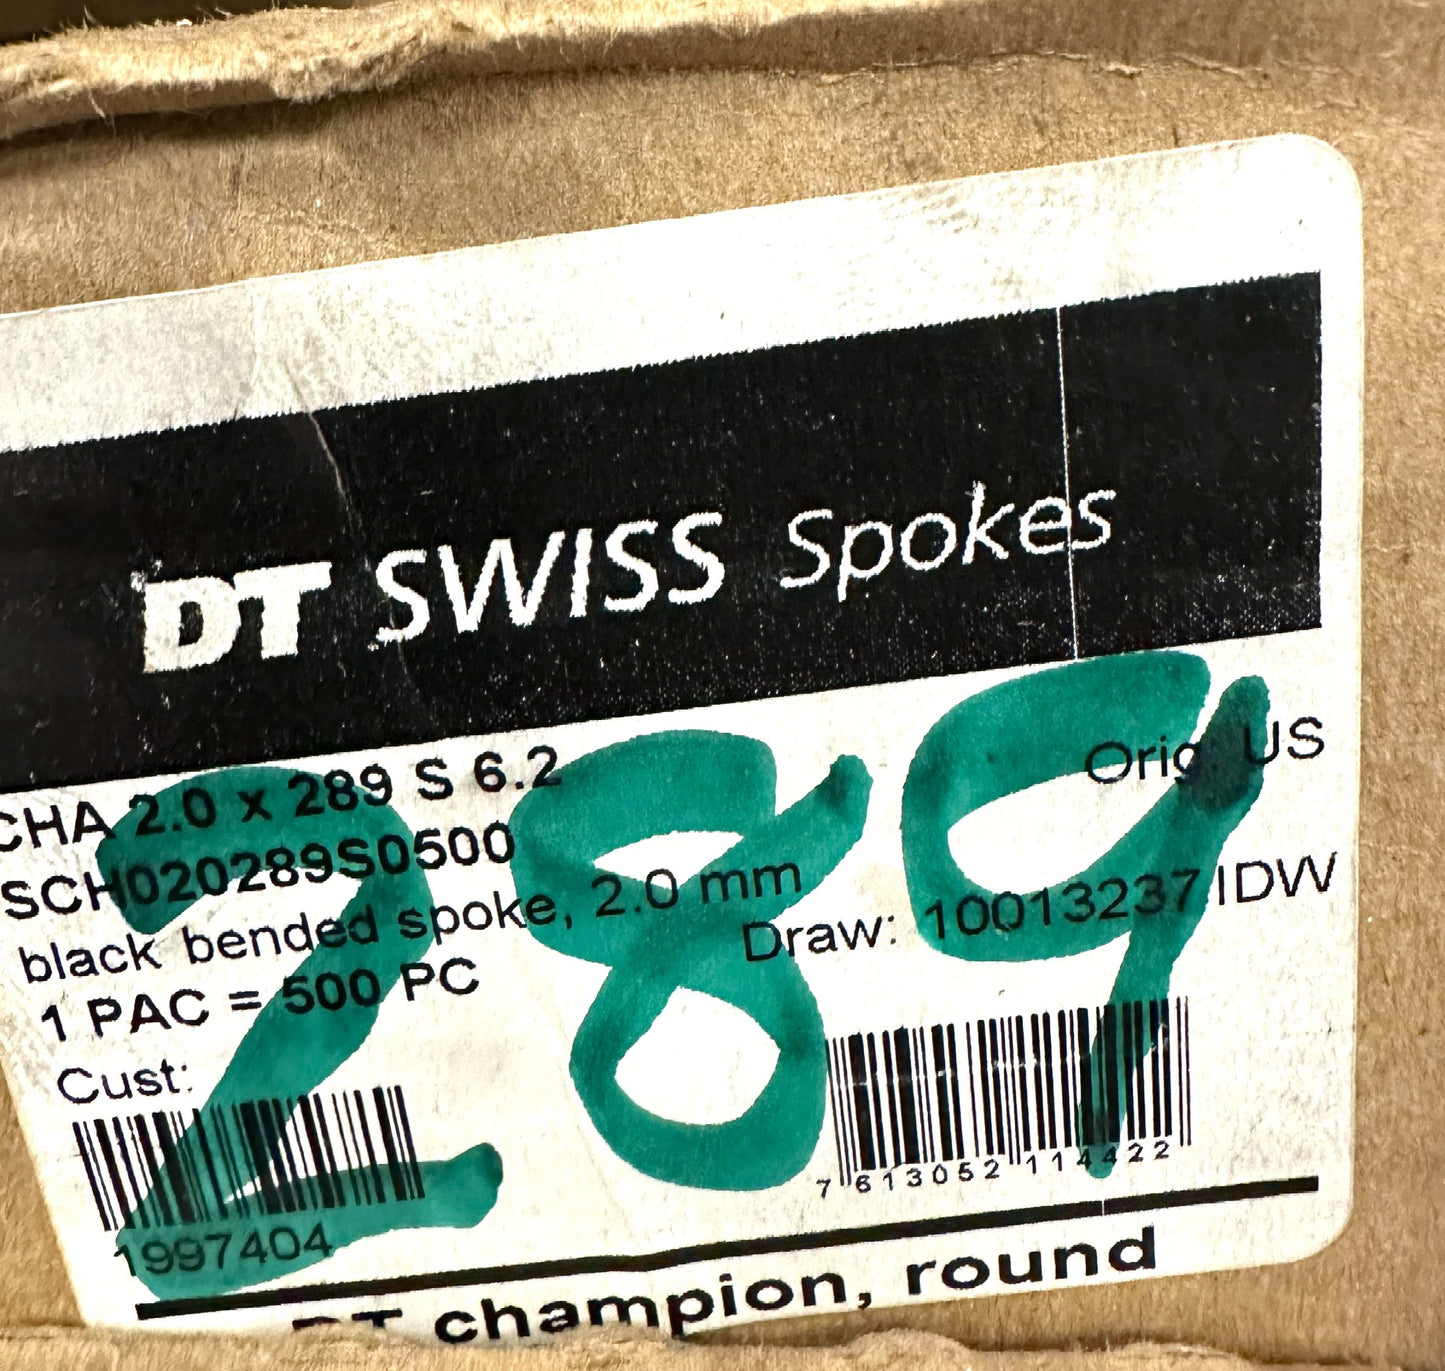 DT SWISS Champion Round Black Spokes Black J-bend 2.0 mm 289mm 20/Count